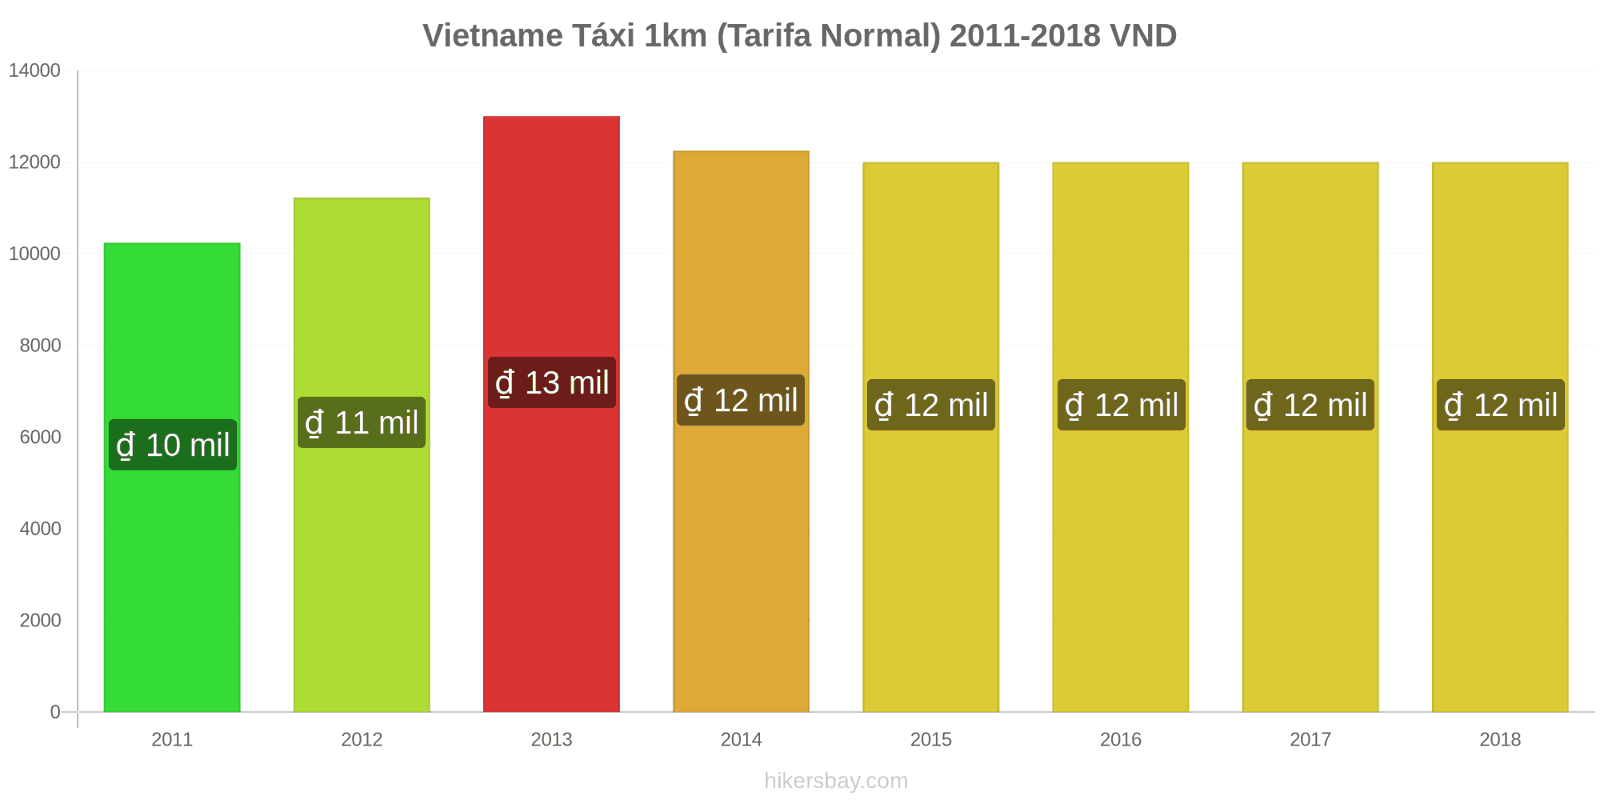 Vietname mudanças de preços Táxi 1km (Tarifa Normal) hikersbay.com